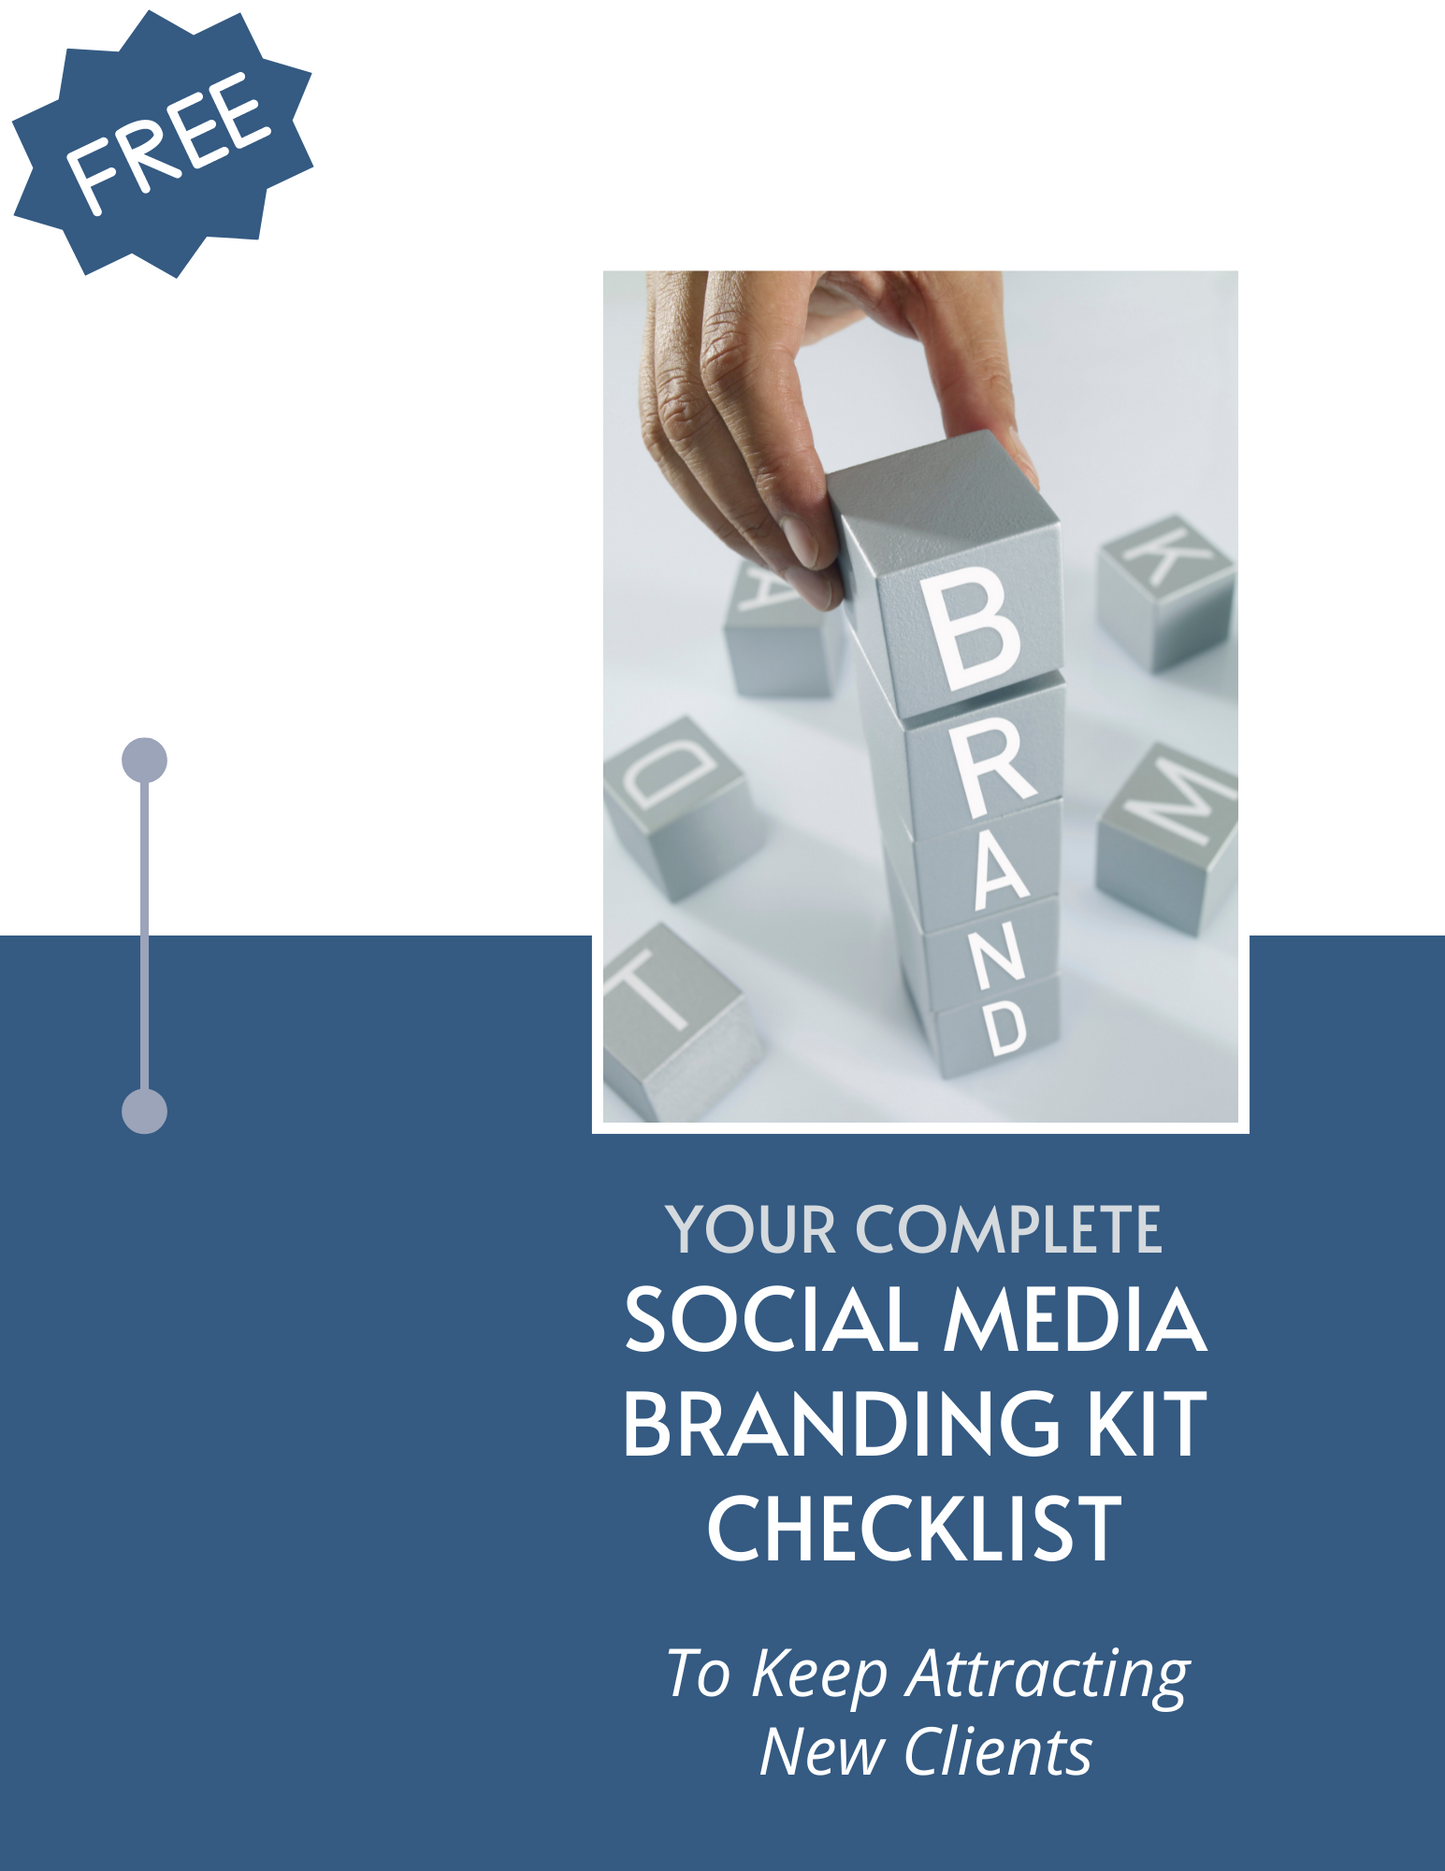 Free Checklist for Social Media Branding